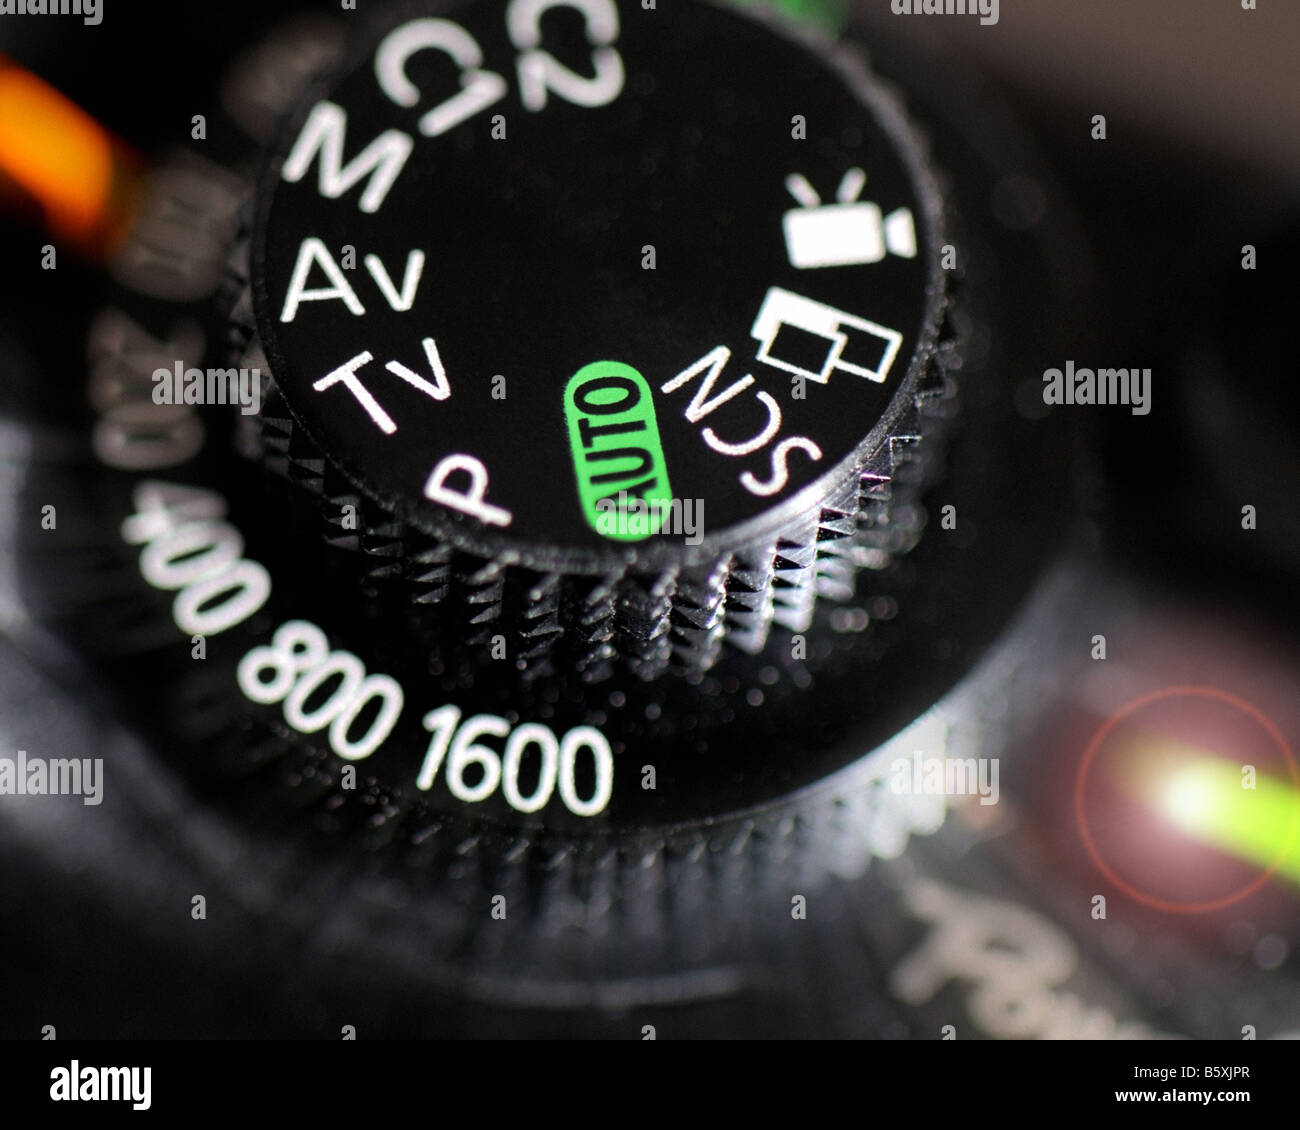 PHOTOGRAPHY: Canon G10 PowerShot Camera Detail Stock Photo